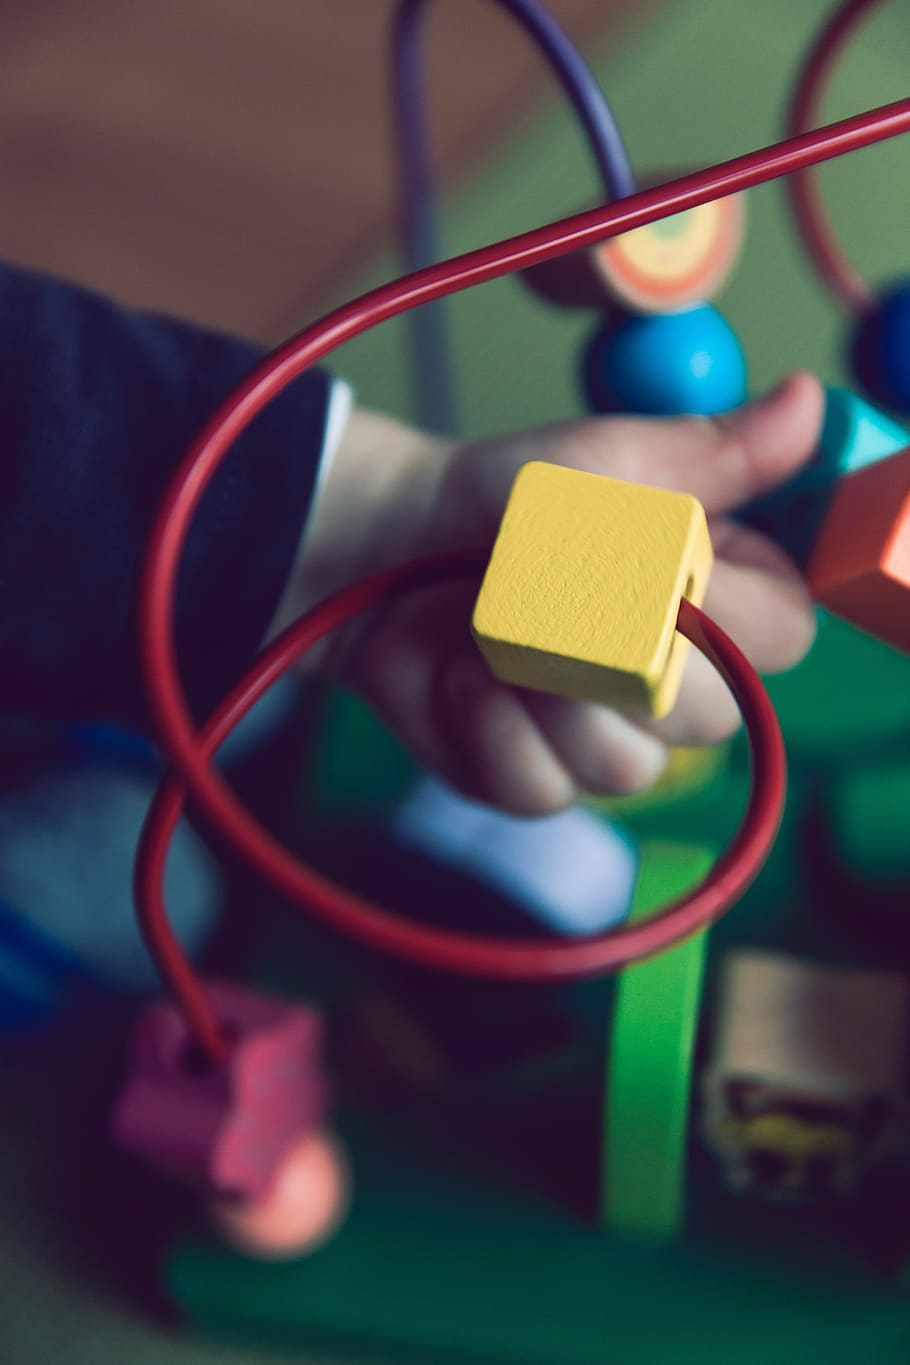 persona, juguete de rompecabezas de alambre, cubo, art, diseño, juguete, cable, caja, formas, amarillo